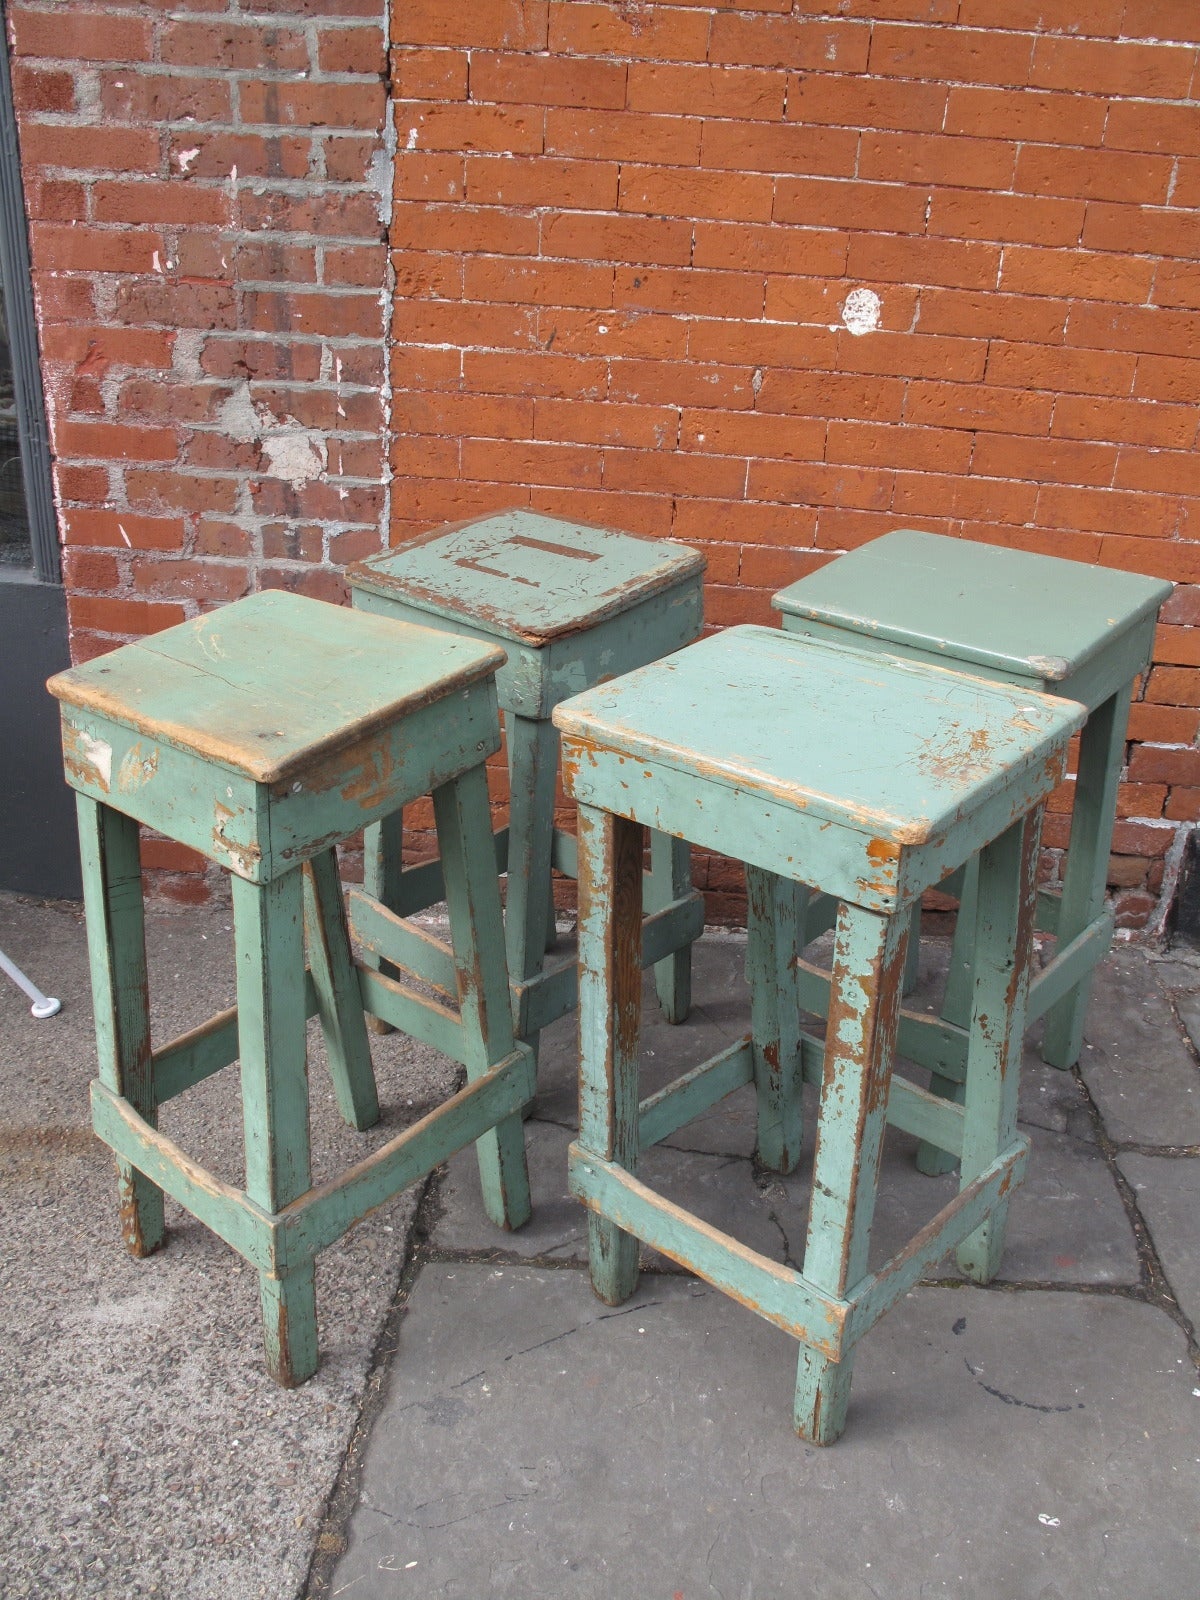 Slight slant to each seat as shown. Original turquoise paint.